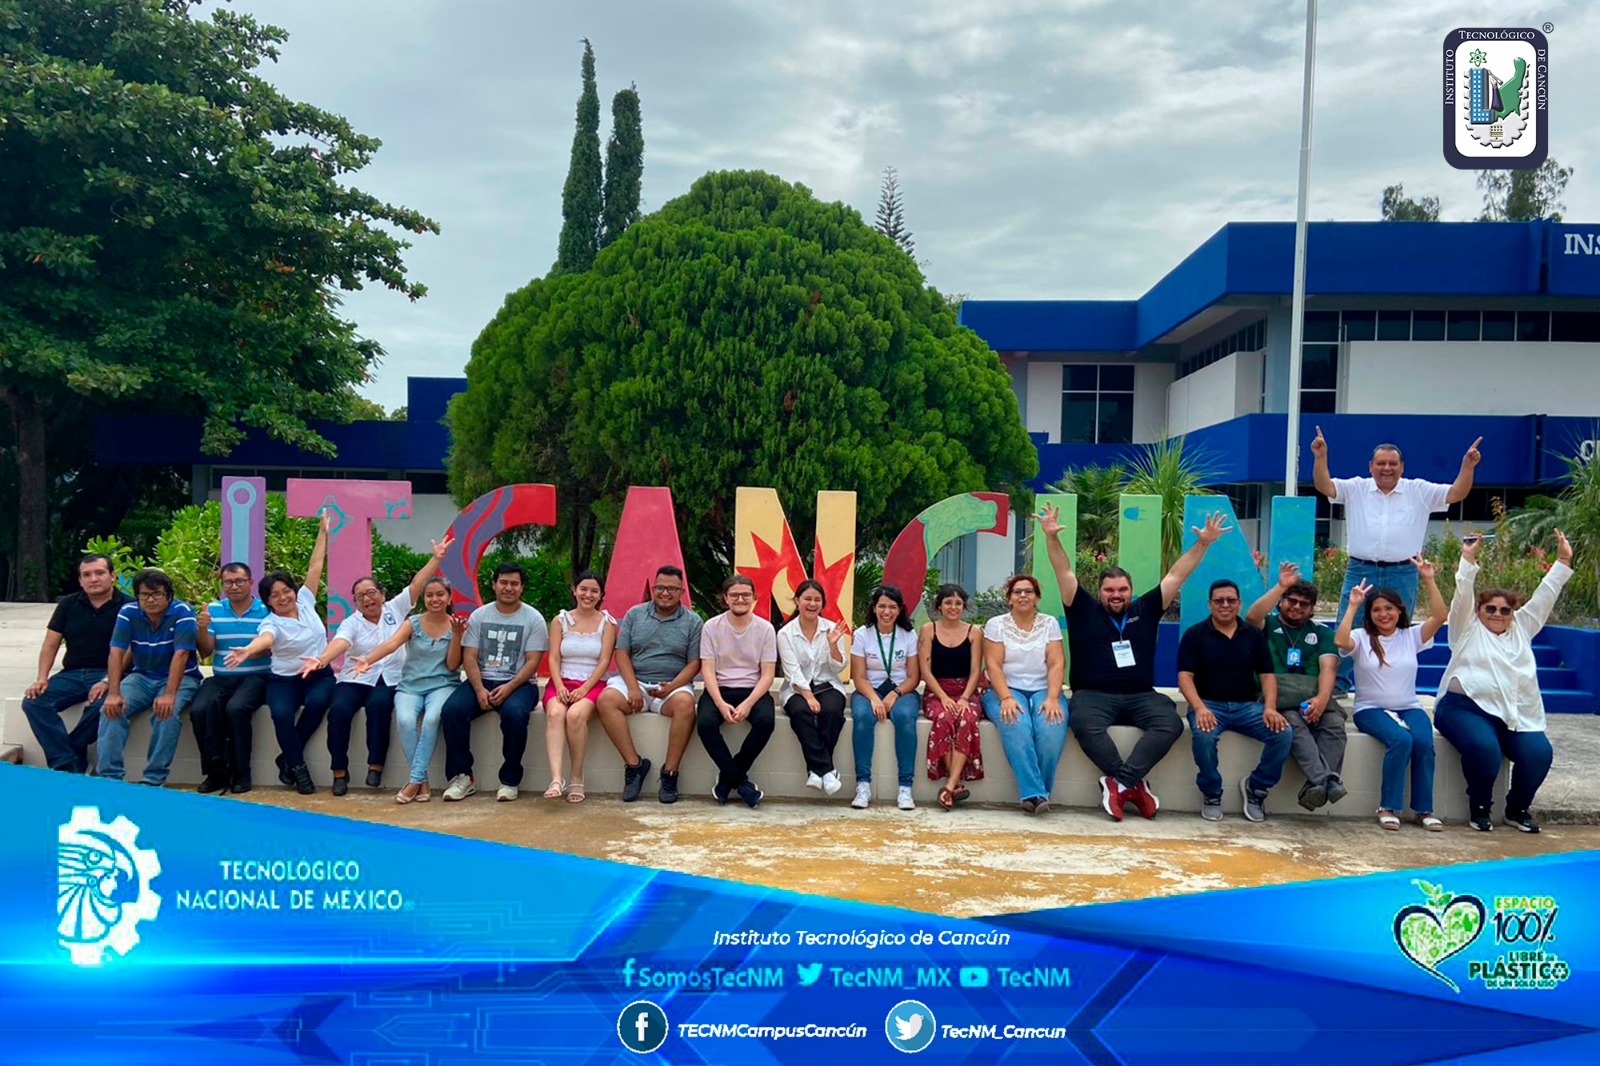 El TecNM campus Cancún participa en la “31st. International Materials Research Congress 2023” que se lleva a cabo en el JW Marriott Cancún Resort & Spa